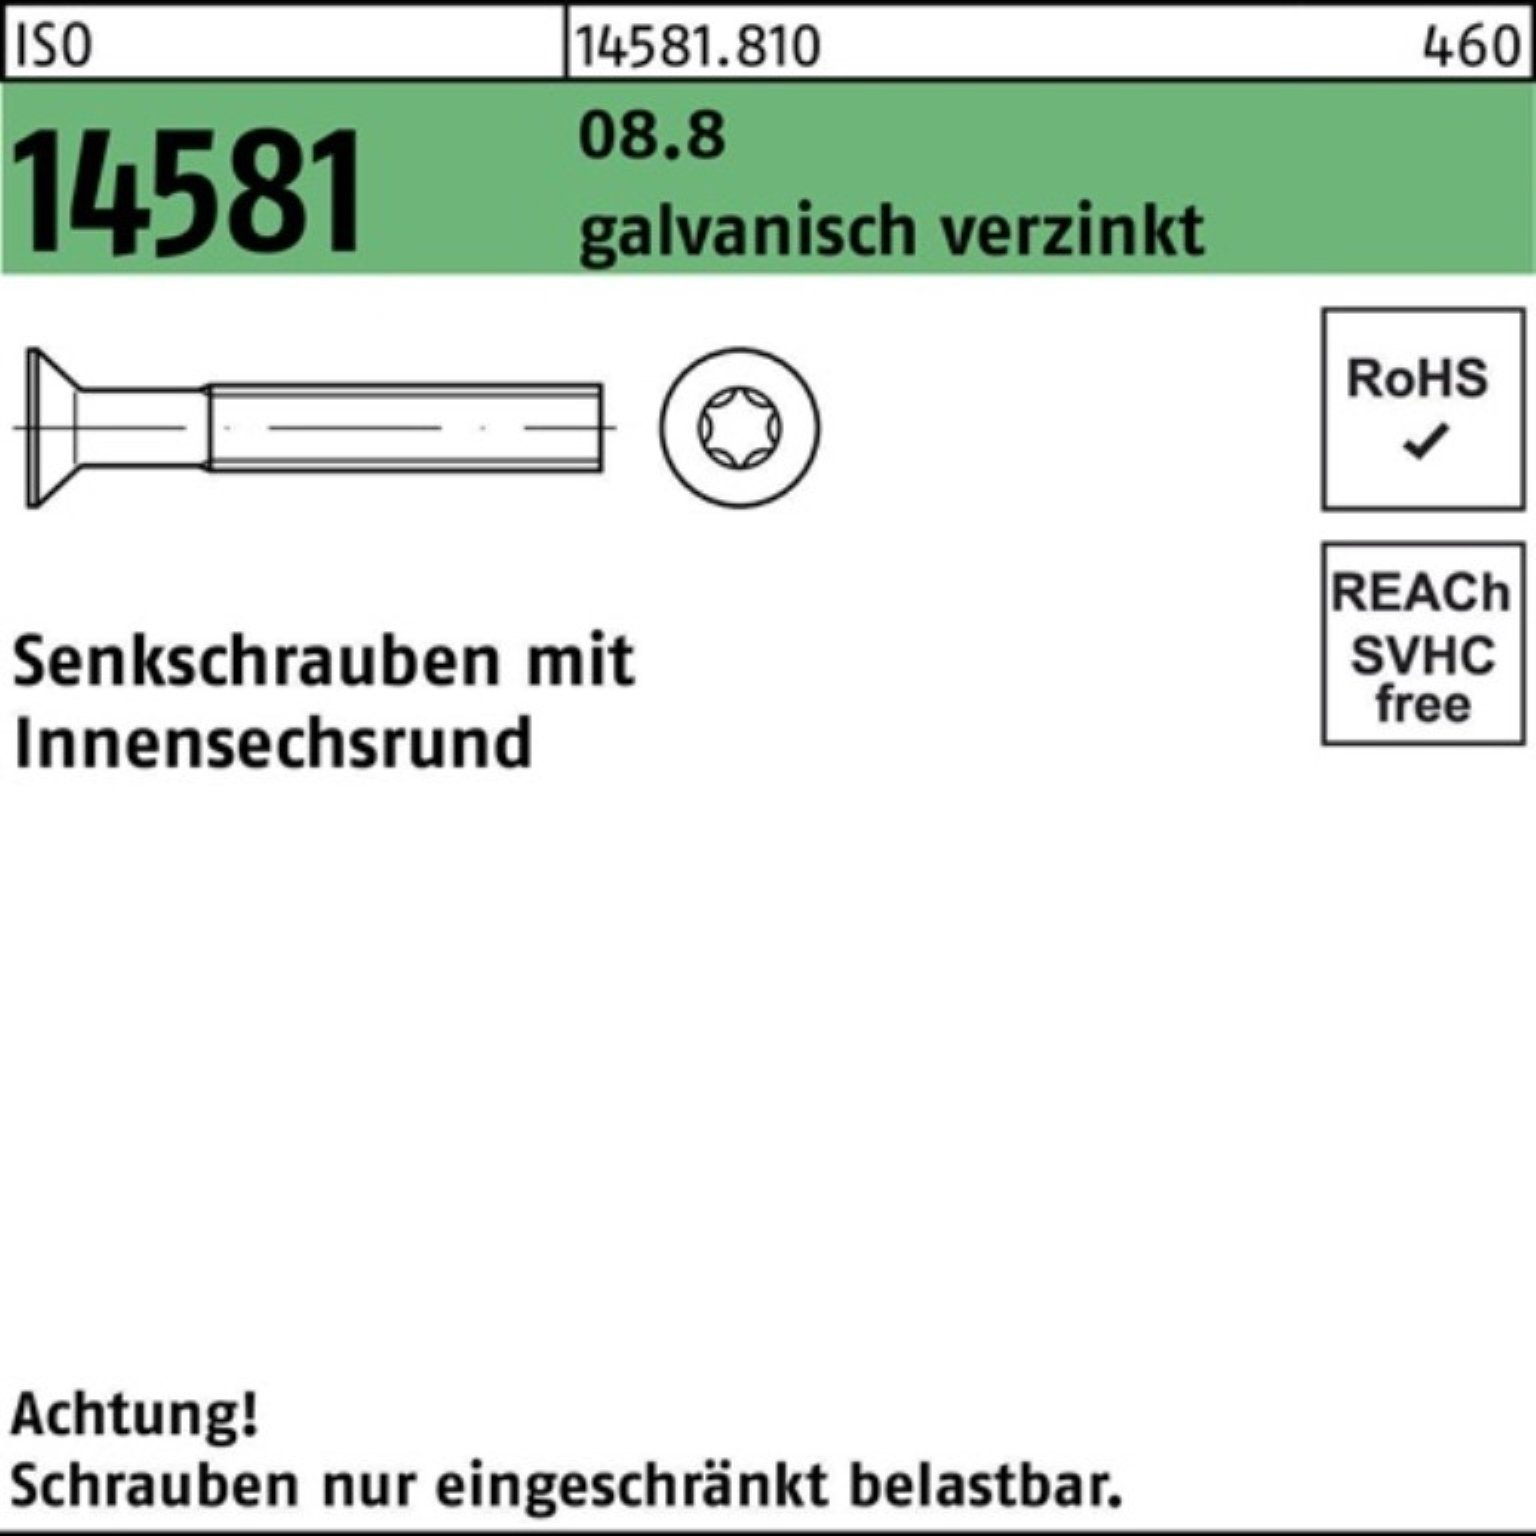 Reyher Senkschraube 500er Pack Senkschraube ISR 500St. T30 14581 galv.verz. M6x10 ISO 8.8